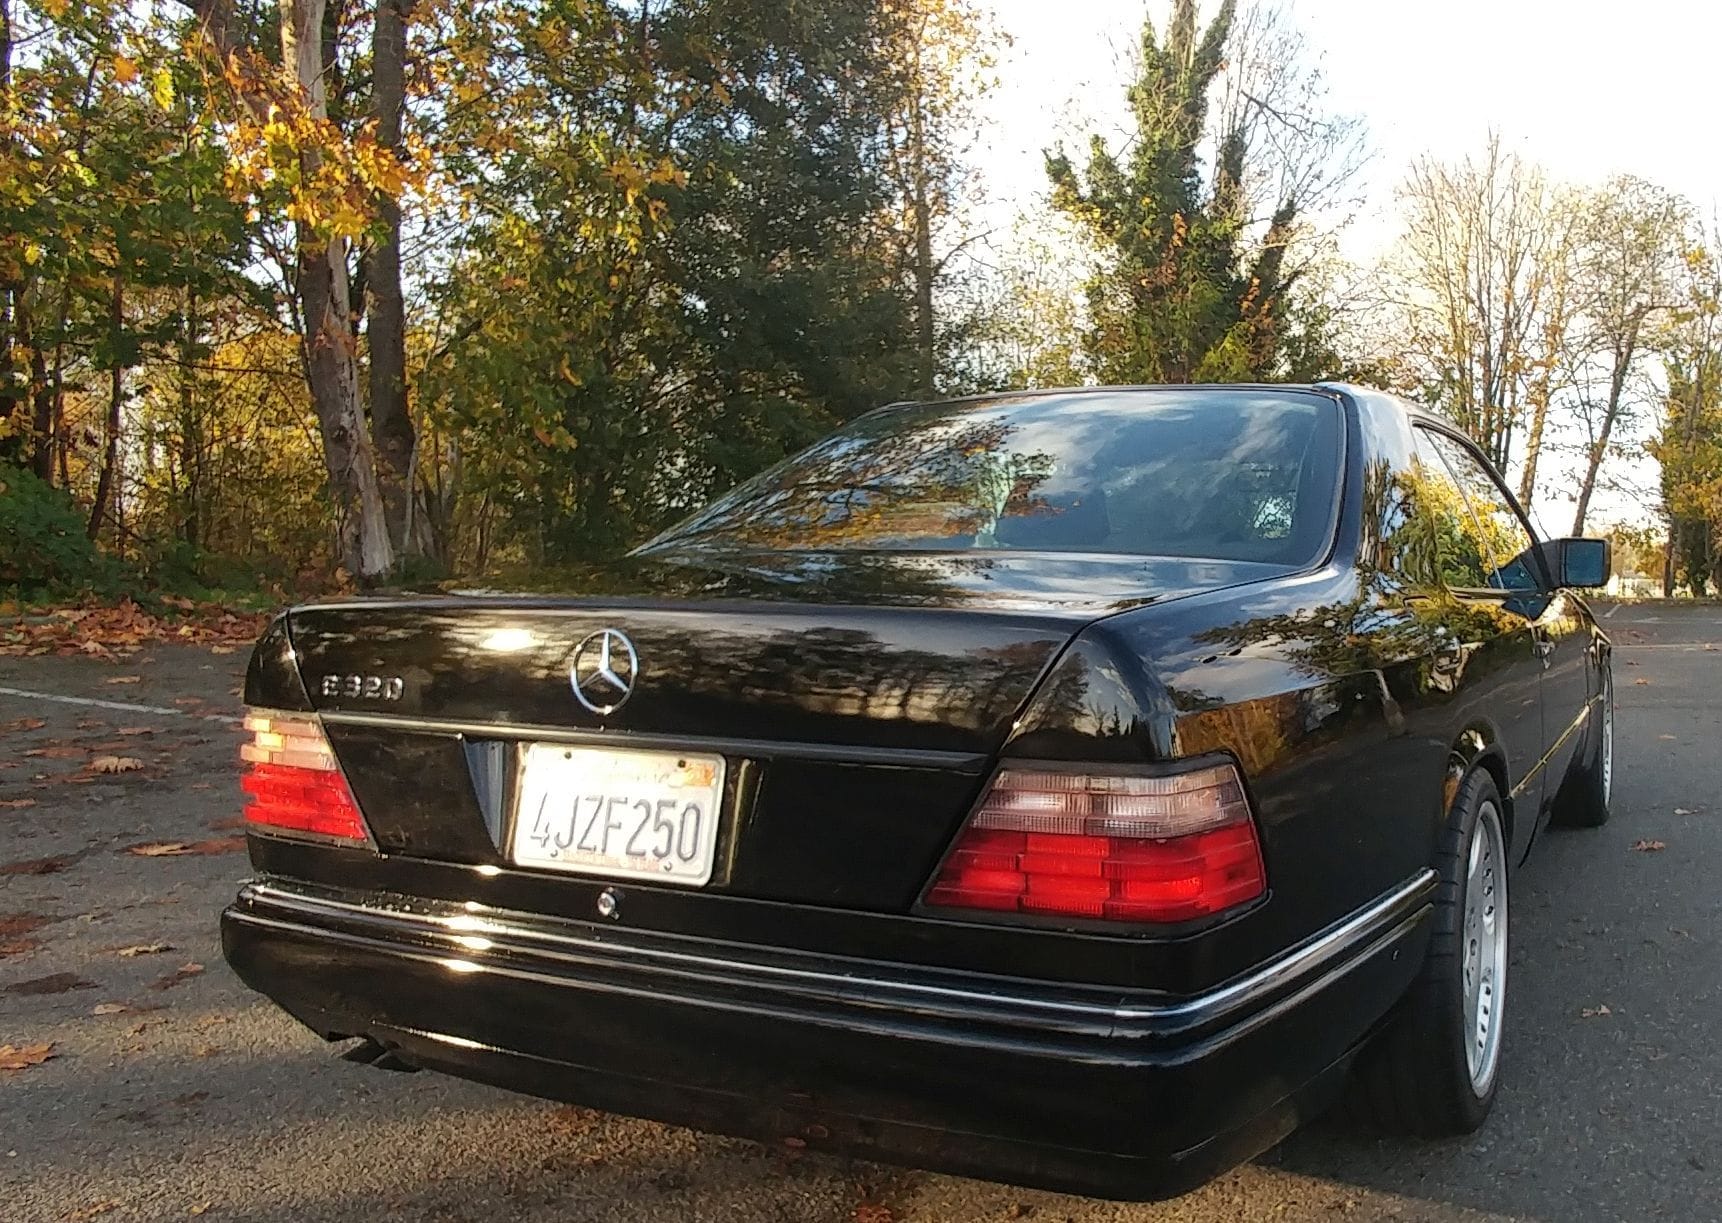 1994 Mercedes-Benz E320 - Beautiful 1994 E320 W124 Coupe - Used - VIN WDBEA52E6RC092637 - 137,302 Miles - 6 cyl - 2WD - Automatic - Coupe - Black - Seattle, WA 98198, United States